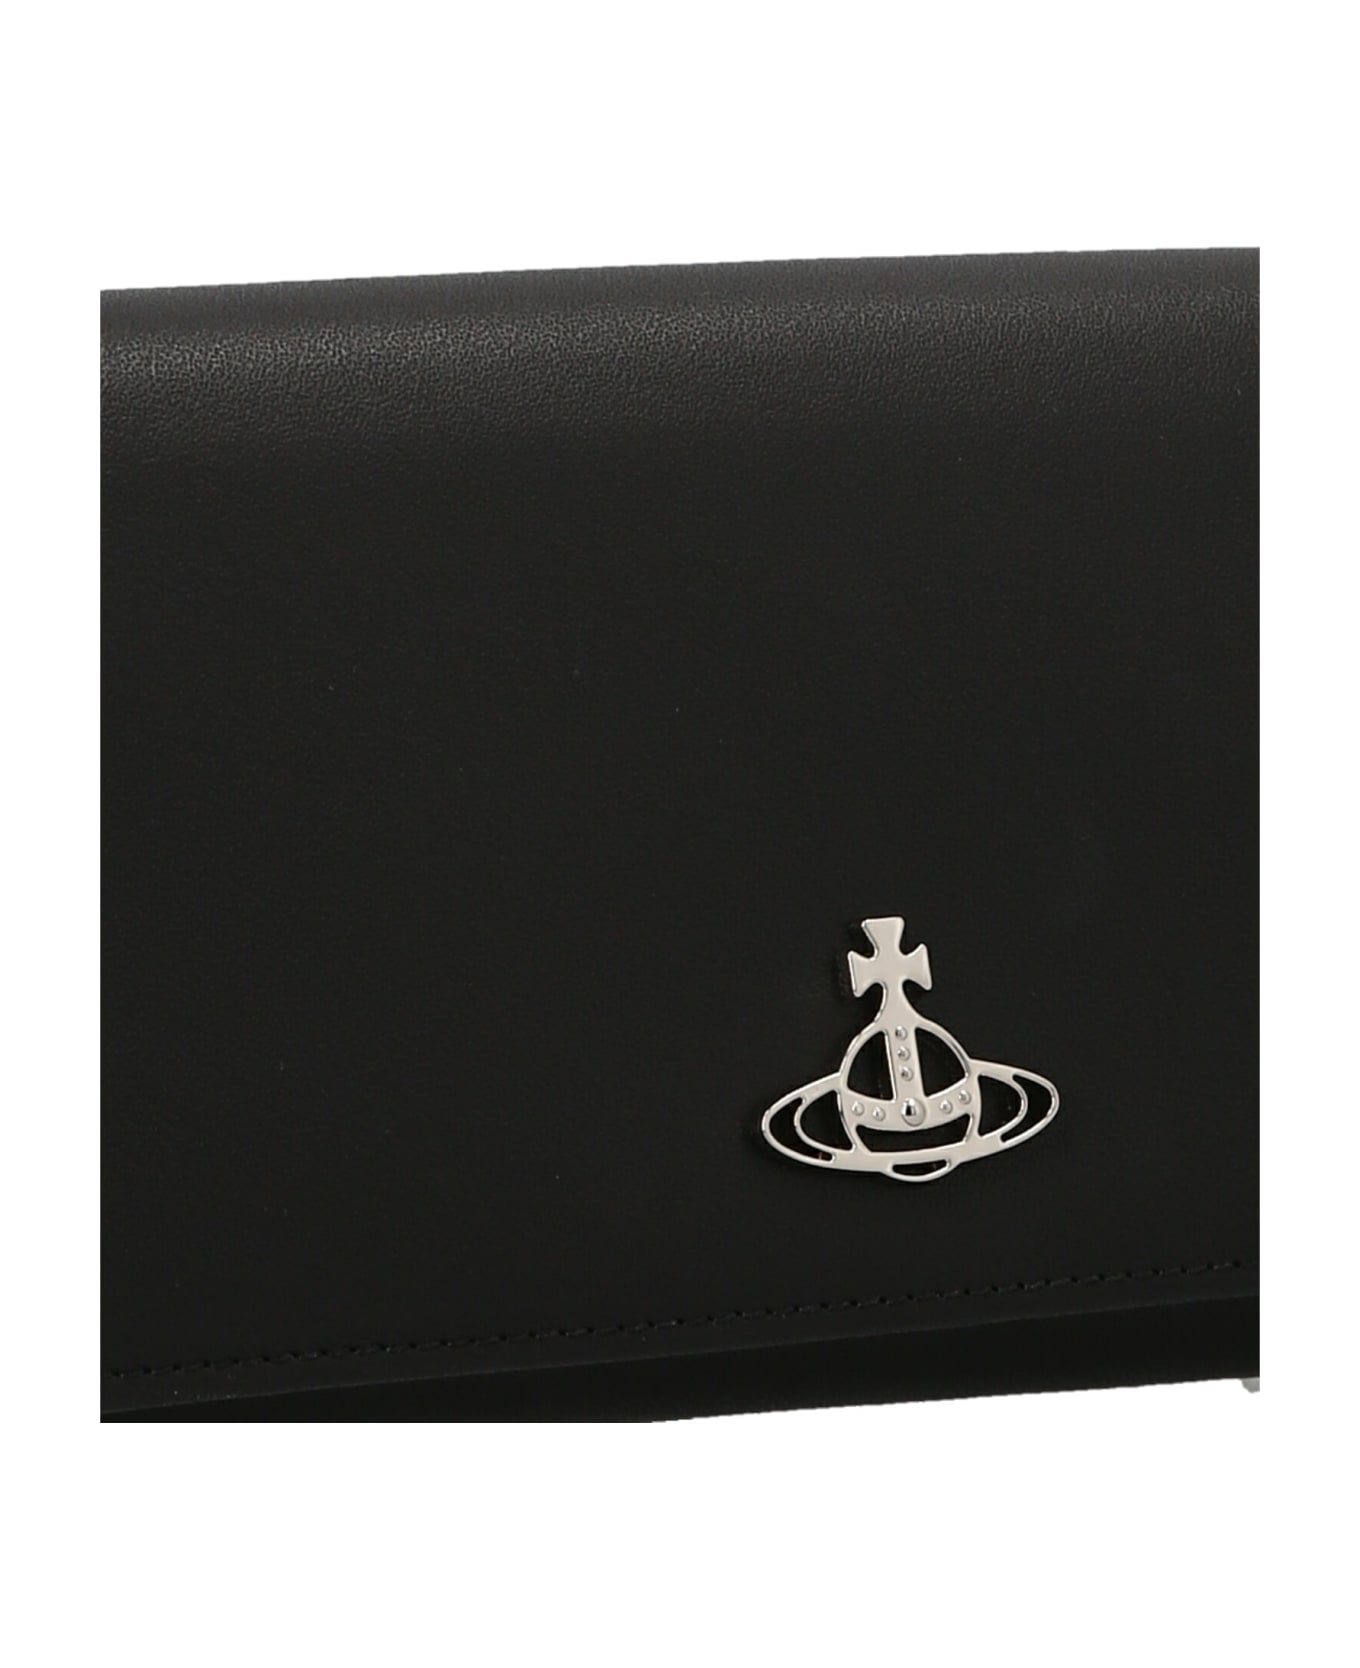 Vivienne Westwood Logo Wallet - Black  